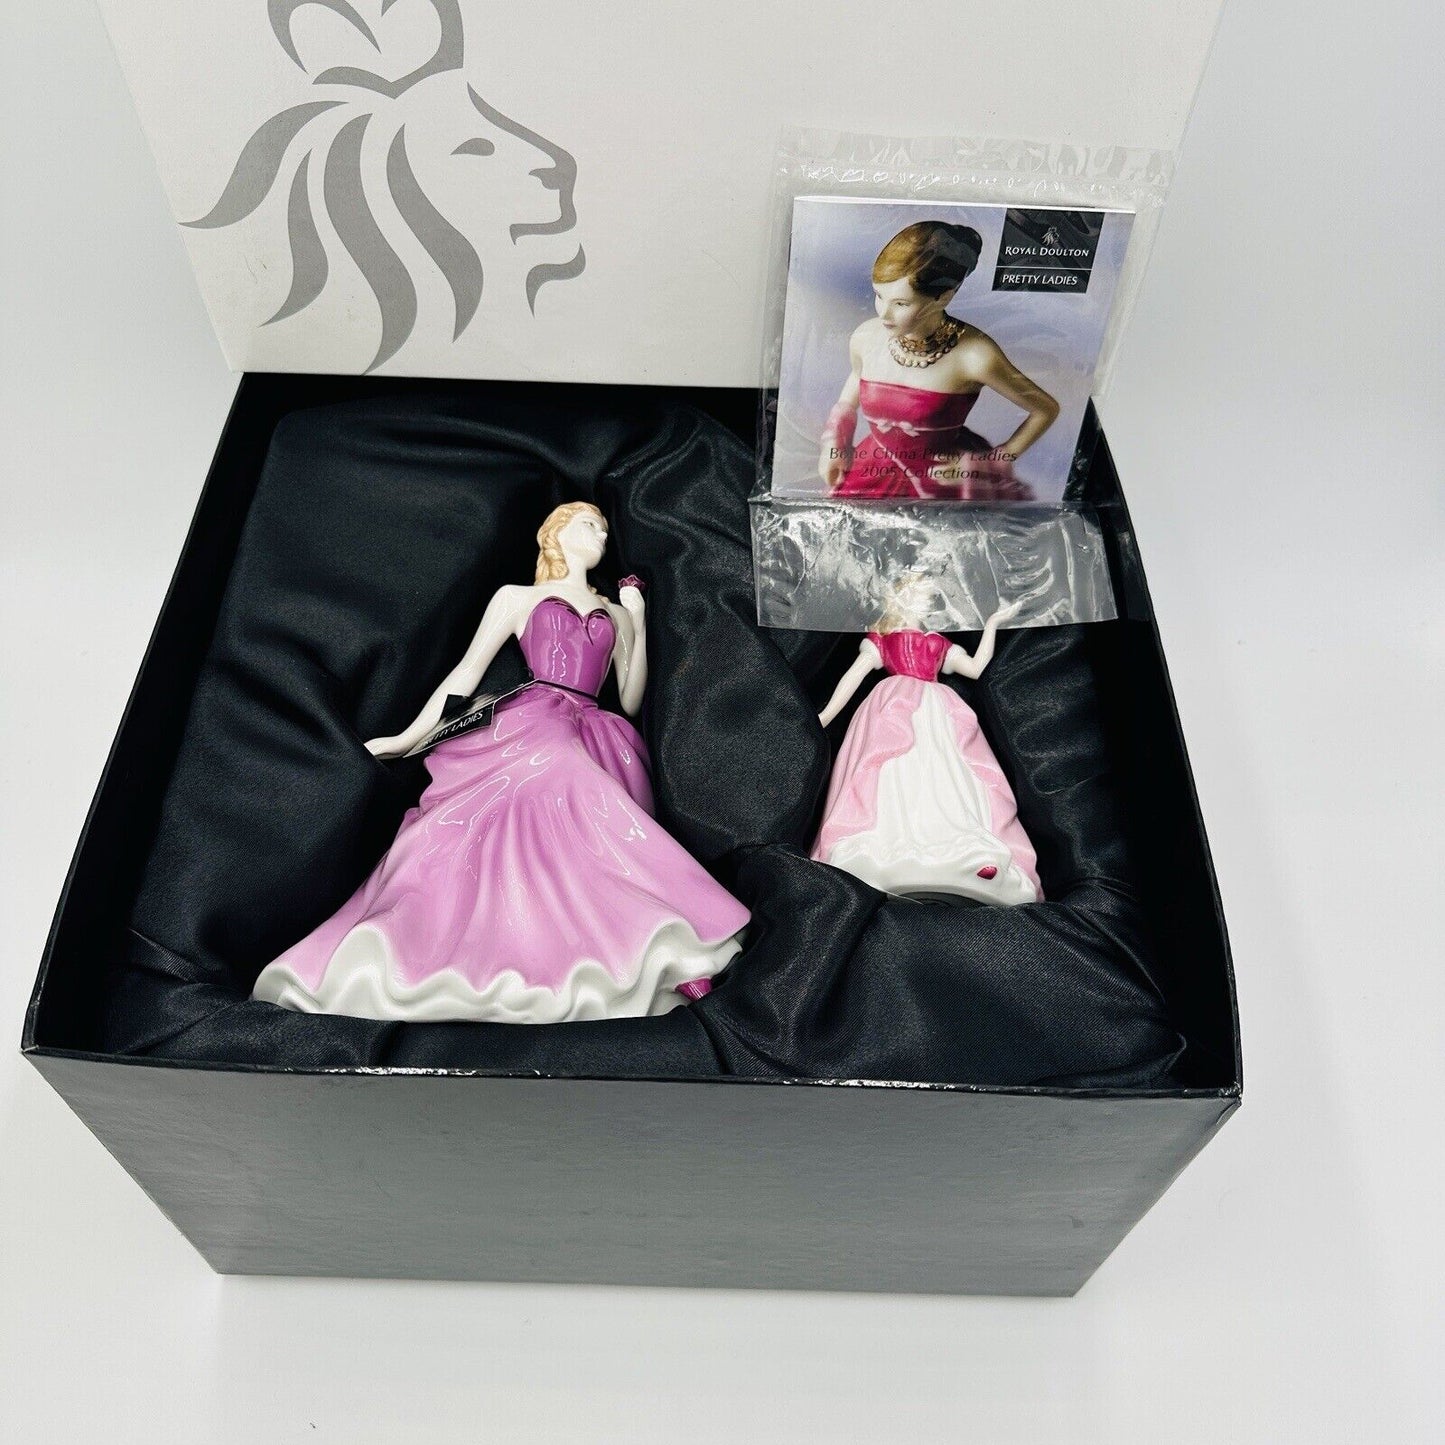 Royal Doulton Figurines Pretty Ladies Victoria Vicky Porcelain England Boxed Set